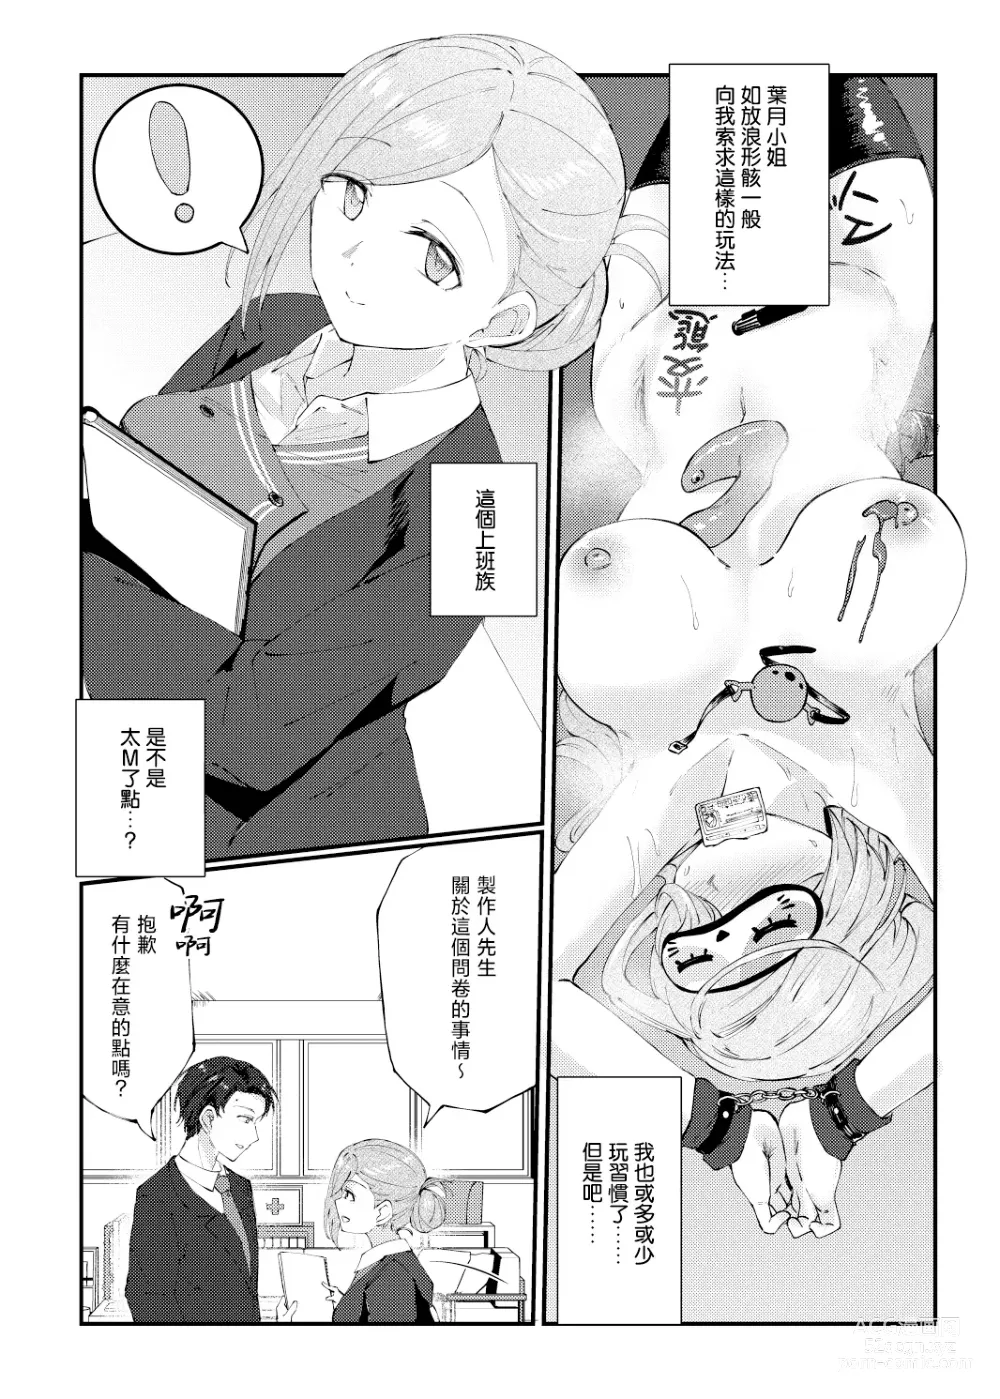 Page 4 of doujinshi 你就是喜欢这种PLAY吗？